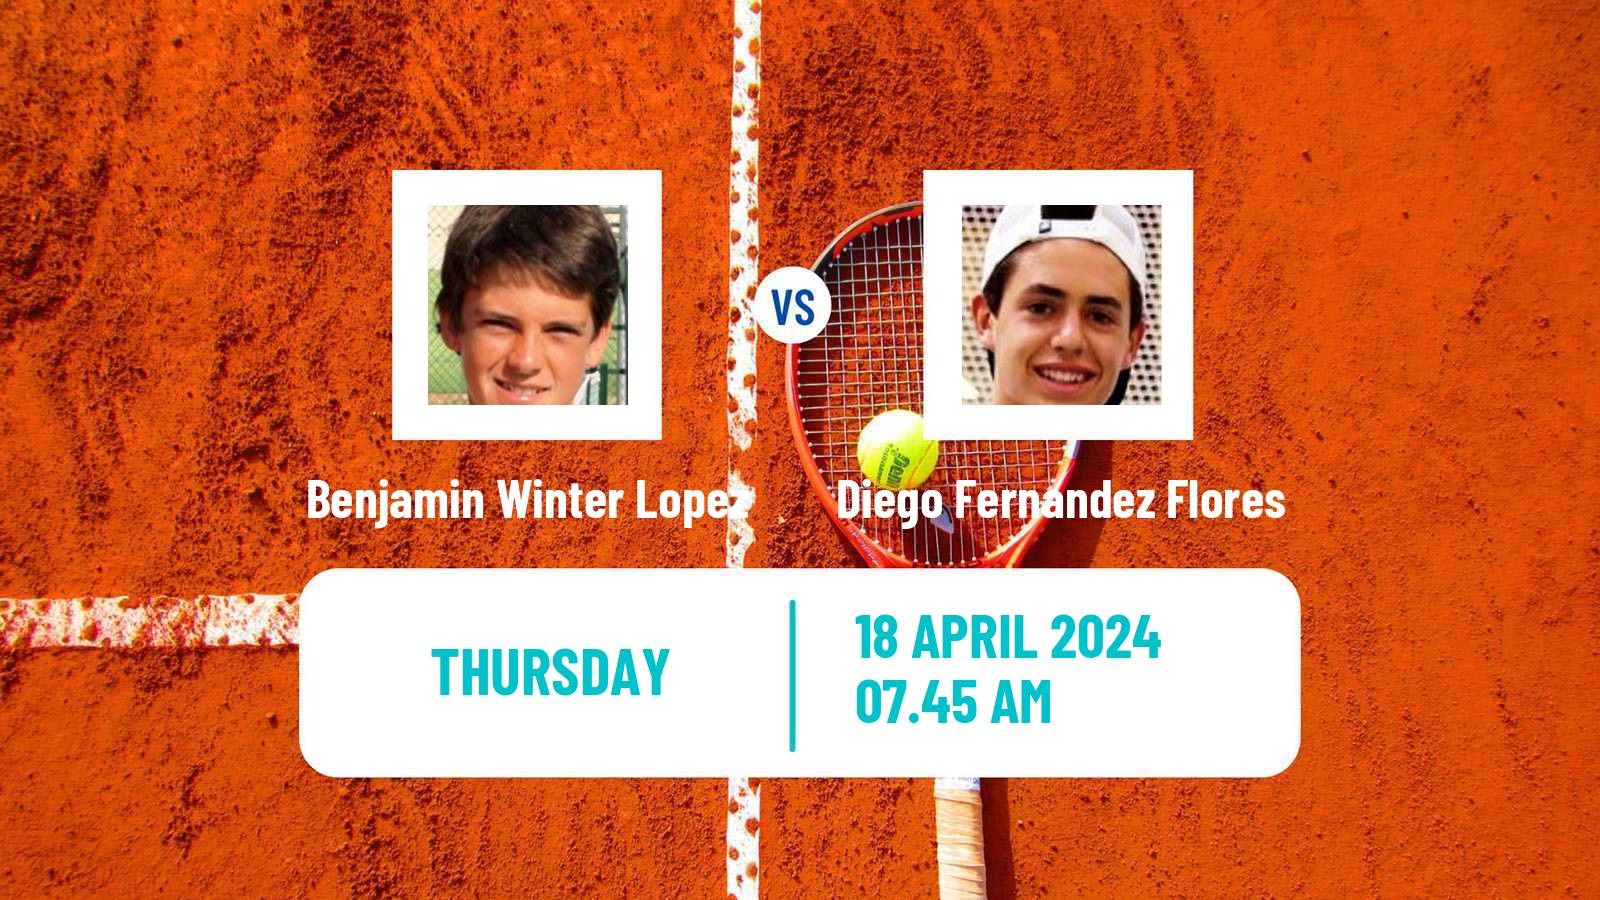 Tennis ITF M15 Telde 2 Men Benjamin Winter Lopez - Diego Fernandez Flores